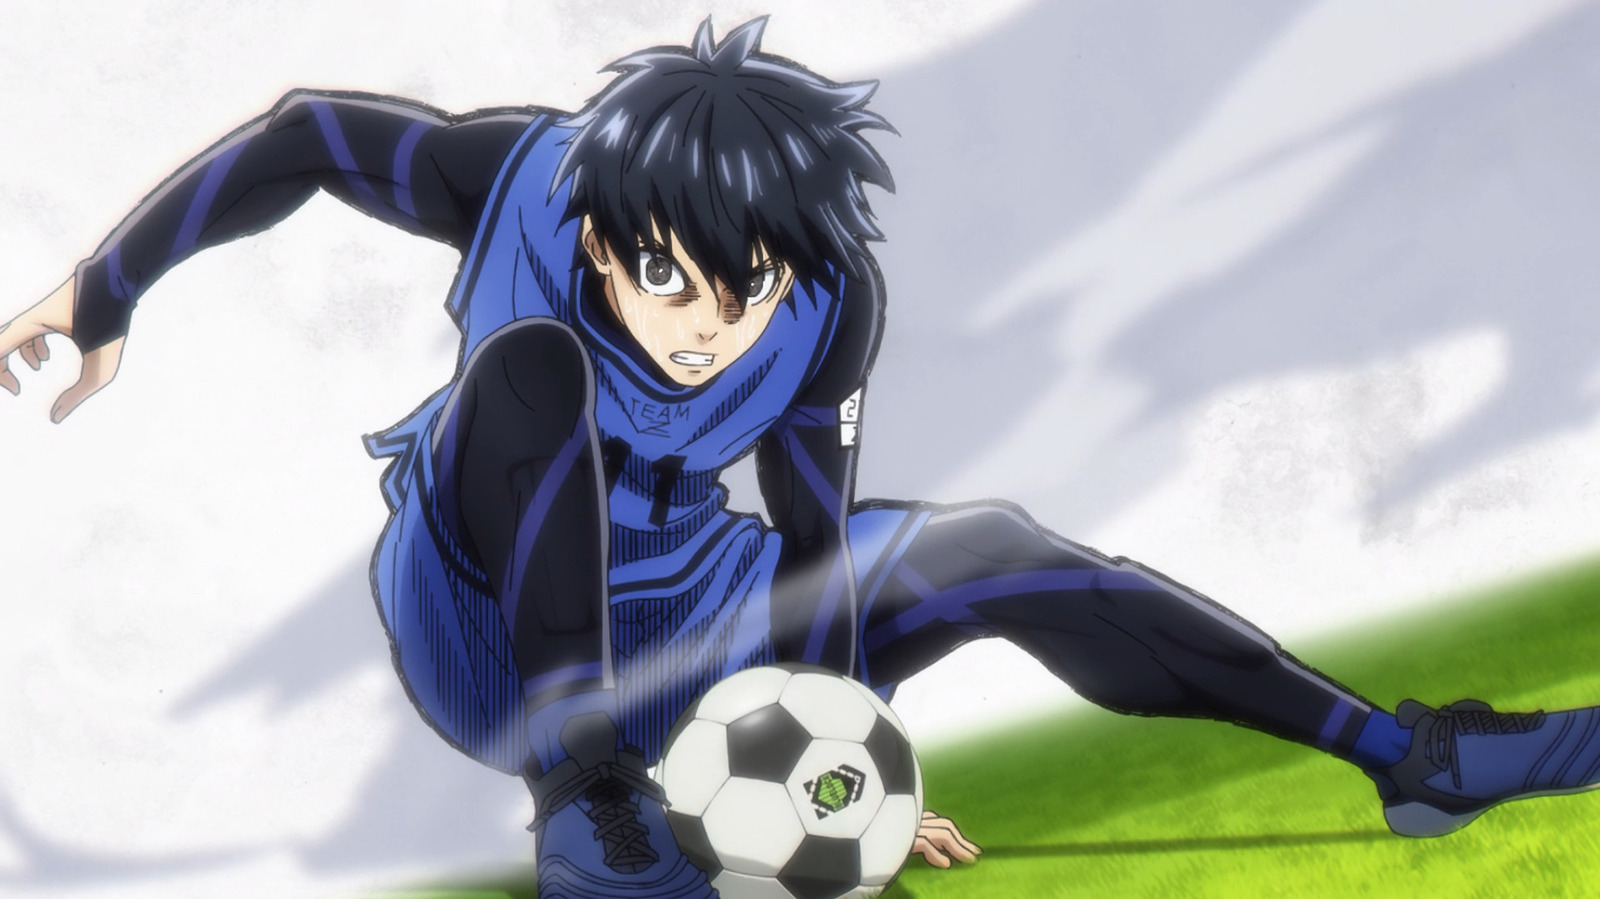 Sinopsis Blue Lock Anime Sepak Bola yang Sedang Populer Saat Ini  Varia  Katadatacoid